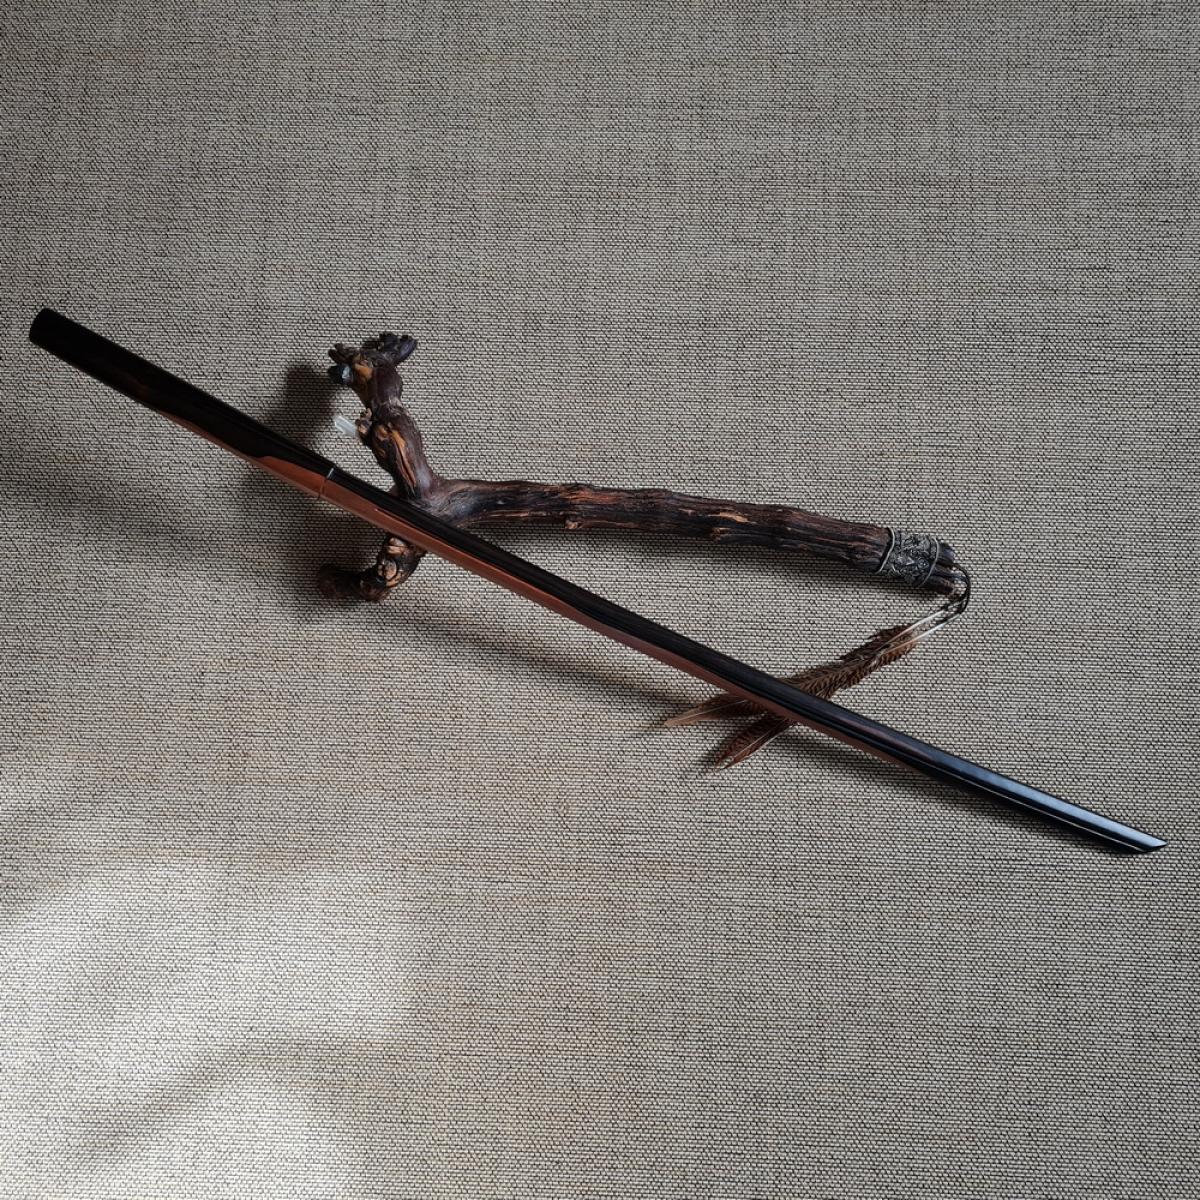 Buy Bokken made of ebony with narrow blade - 110 cm online at ➤ www.bokken-shop.de »Aikido ✓ Iaido ✓ Kendo ✓ Jodo ✔ Itto Ryu Form ✅ Your Budo dealer!